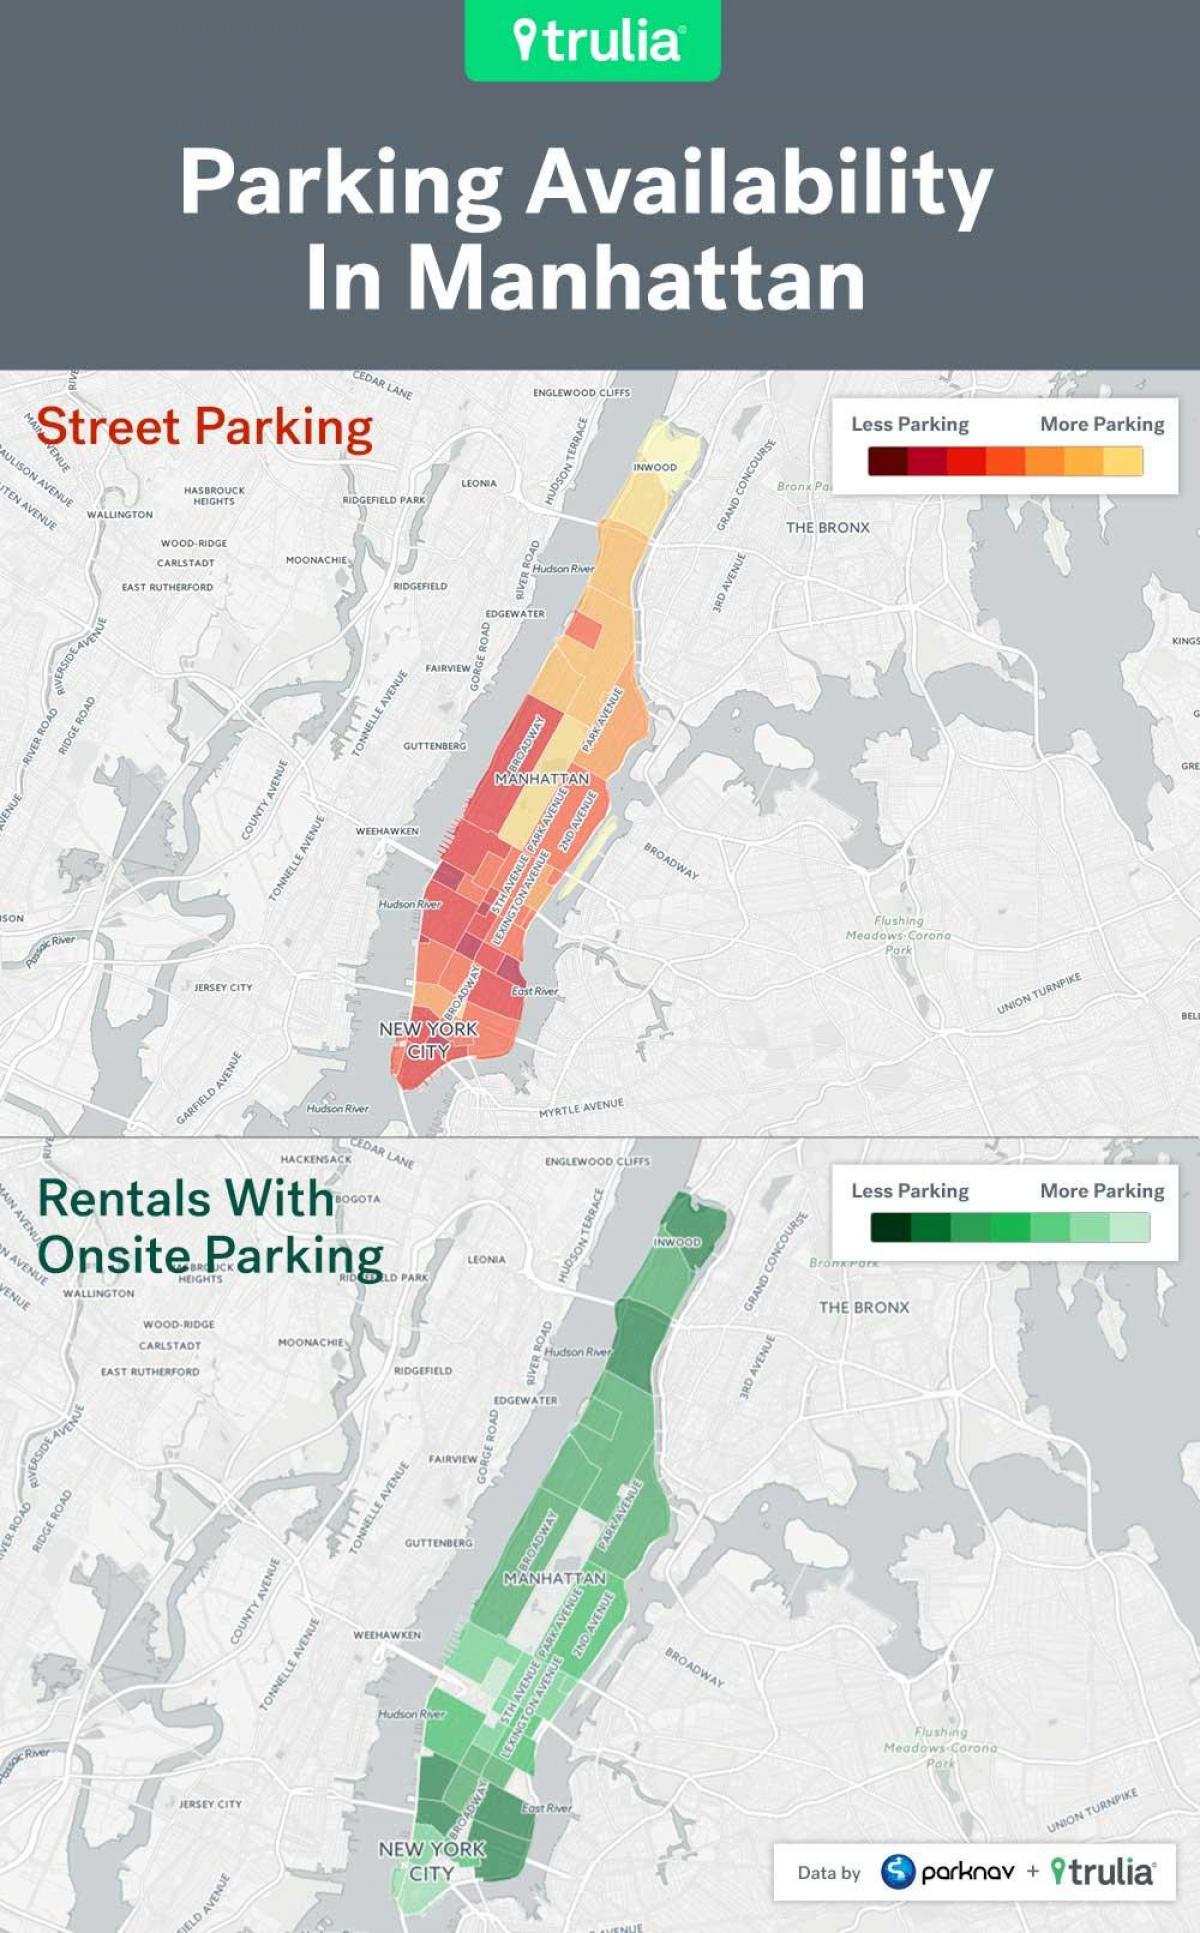 NYC rúa de aparcamento mapa de Manhattan